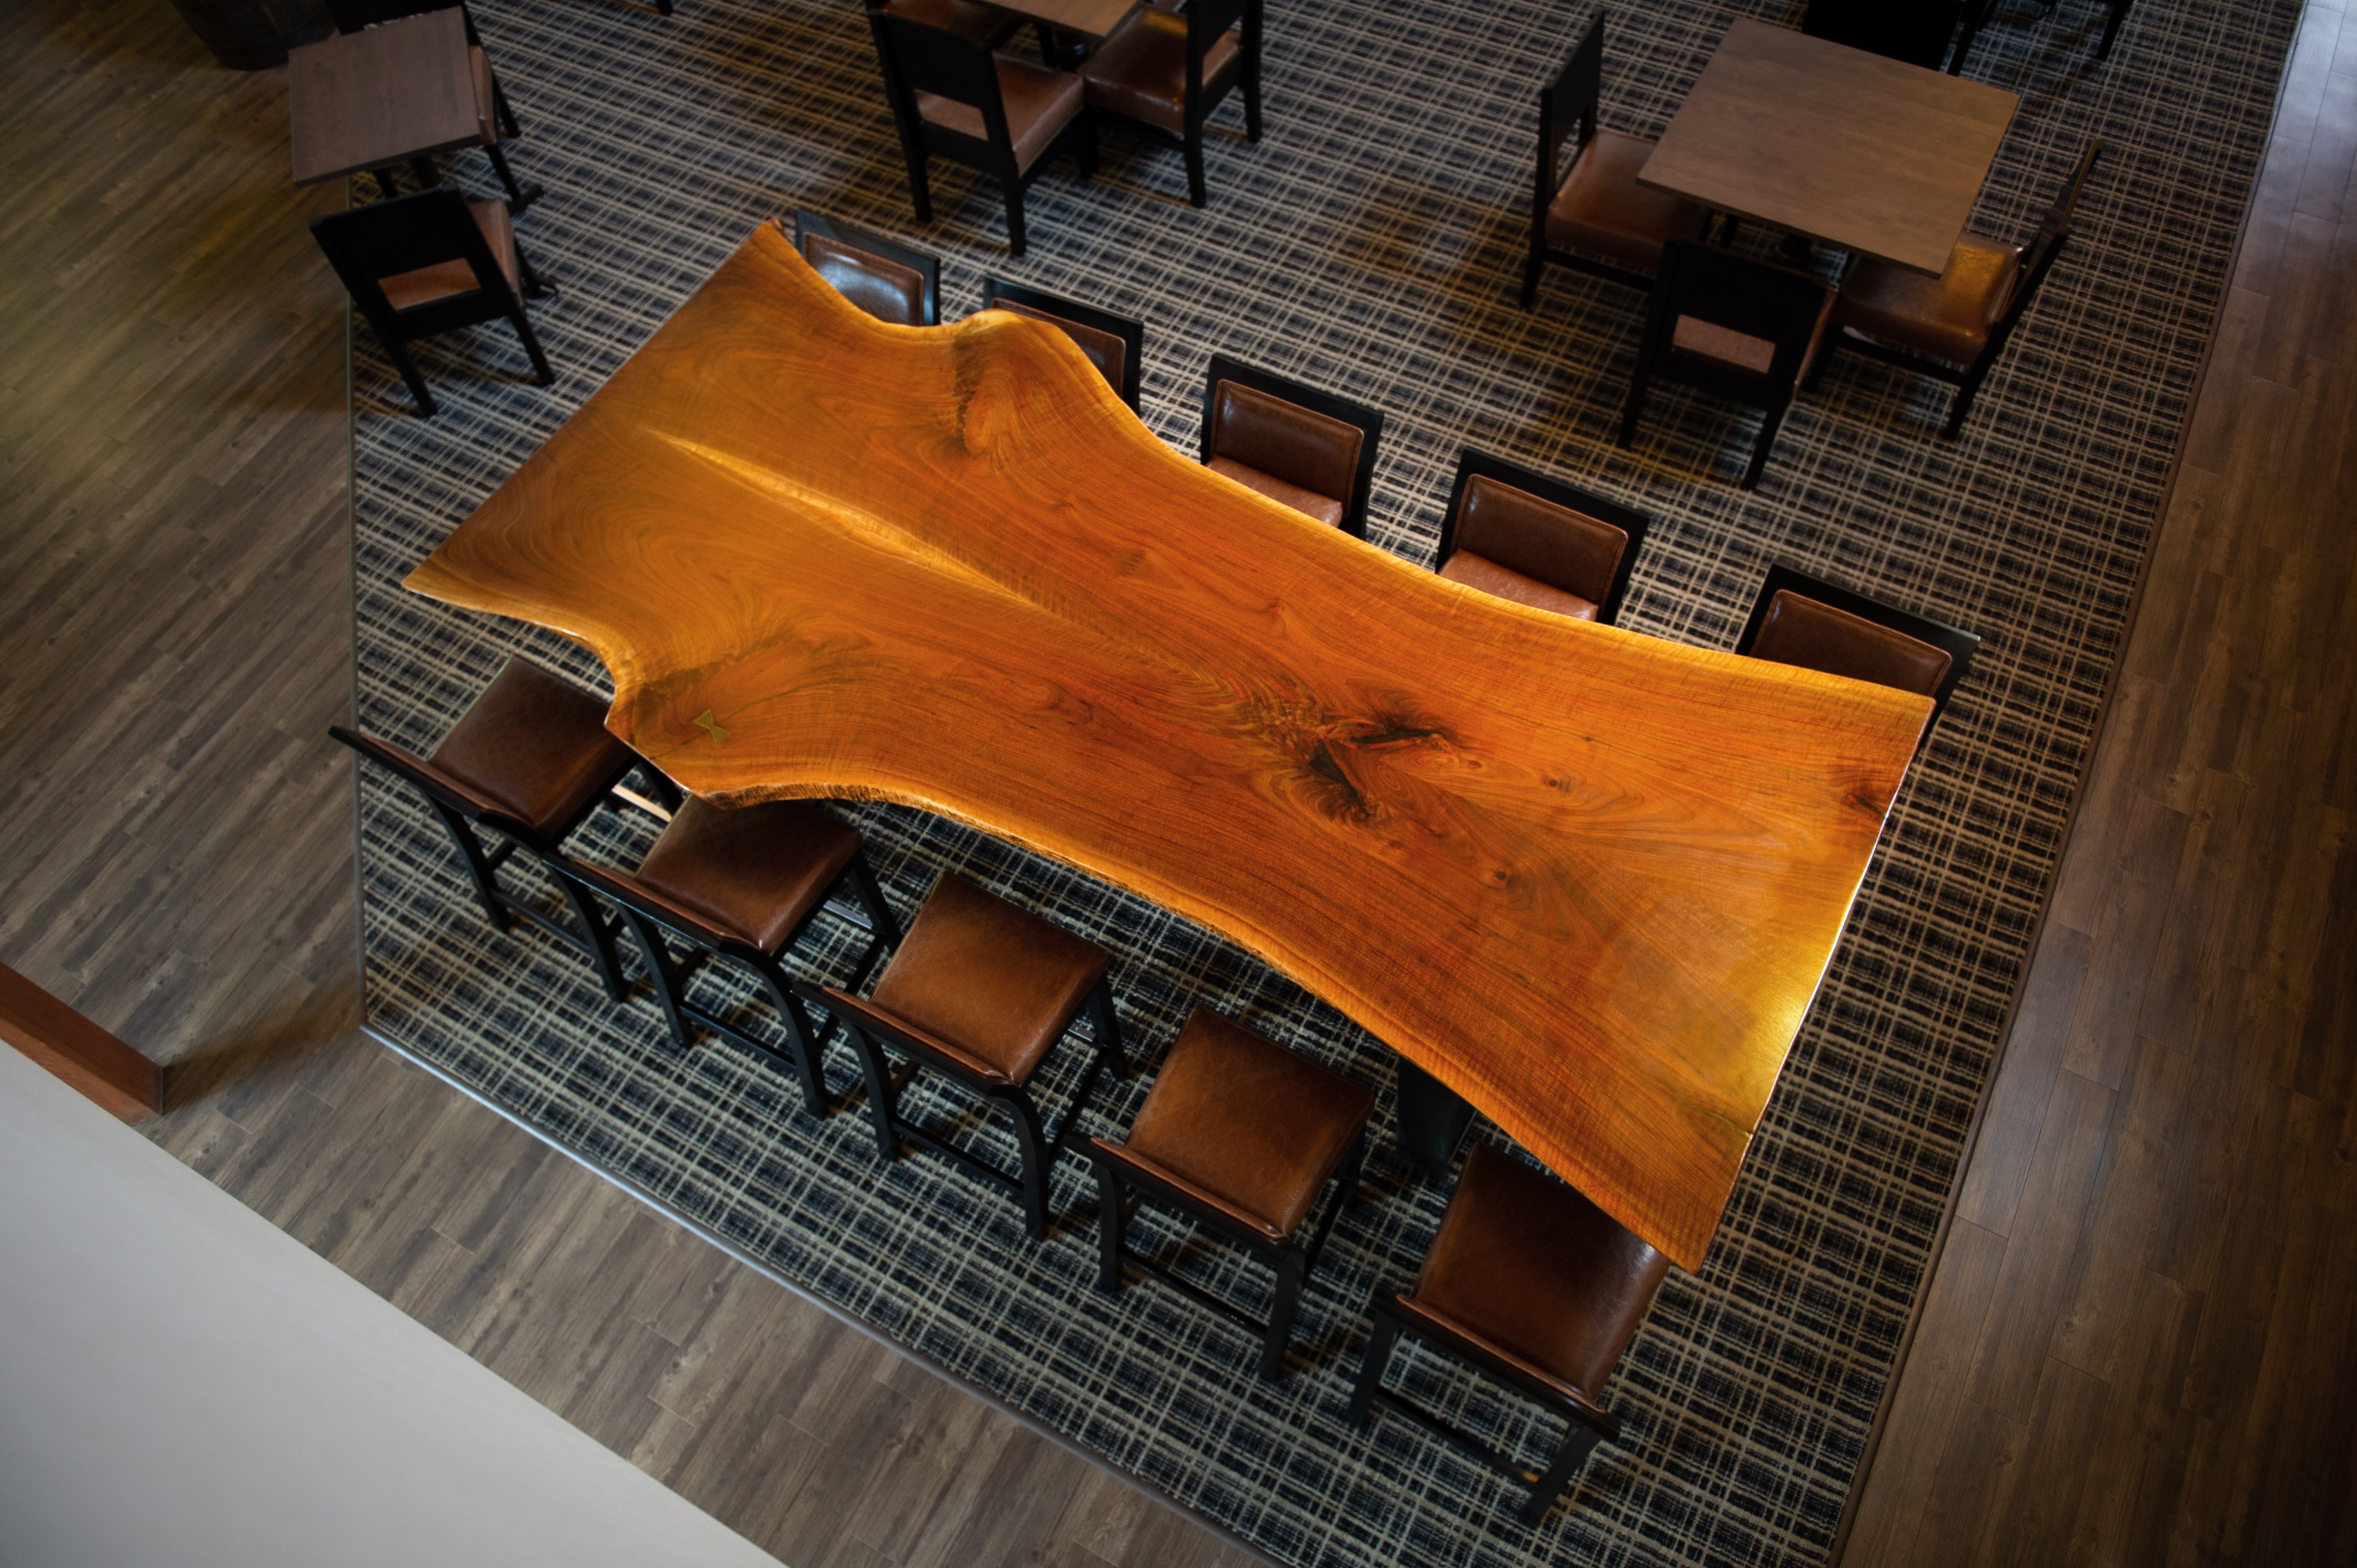 Large custom oak slab community dining table in the lobby